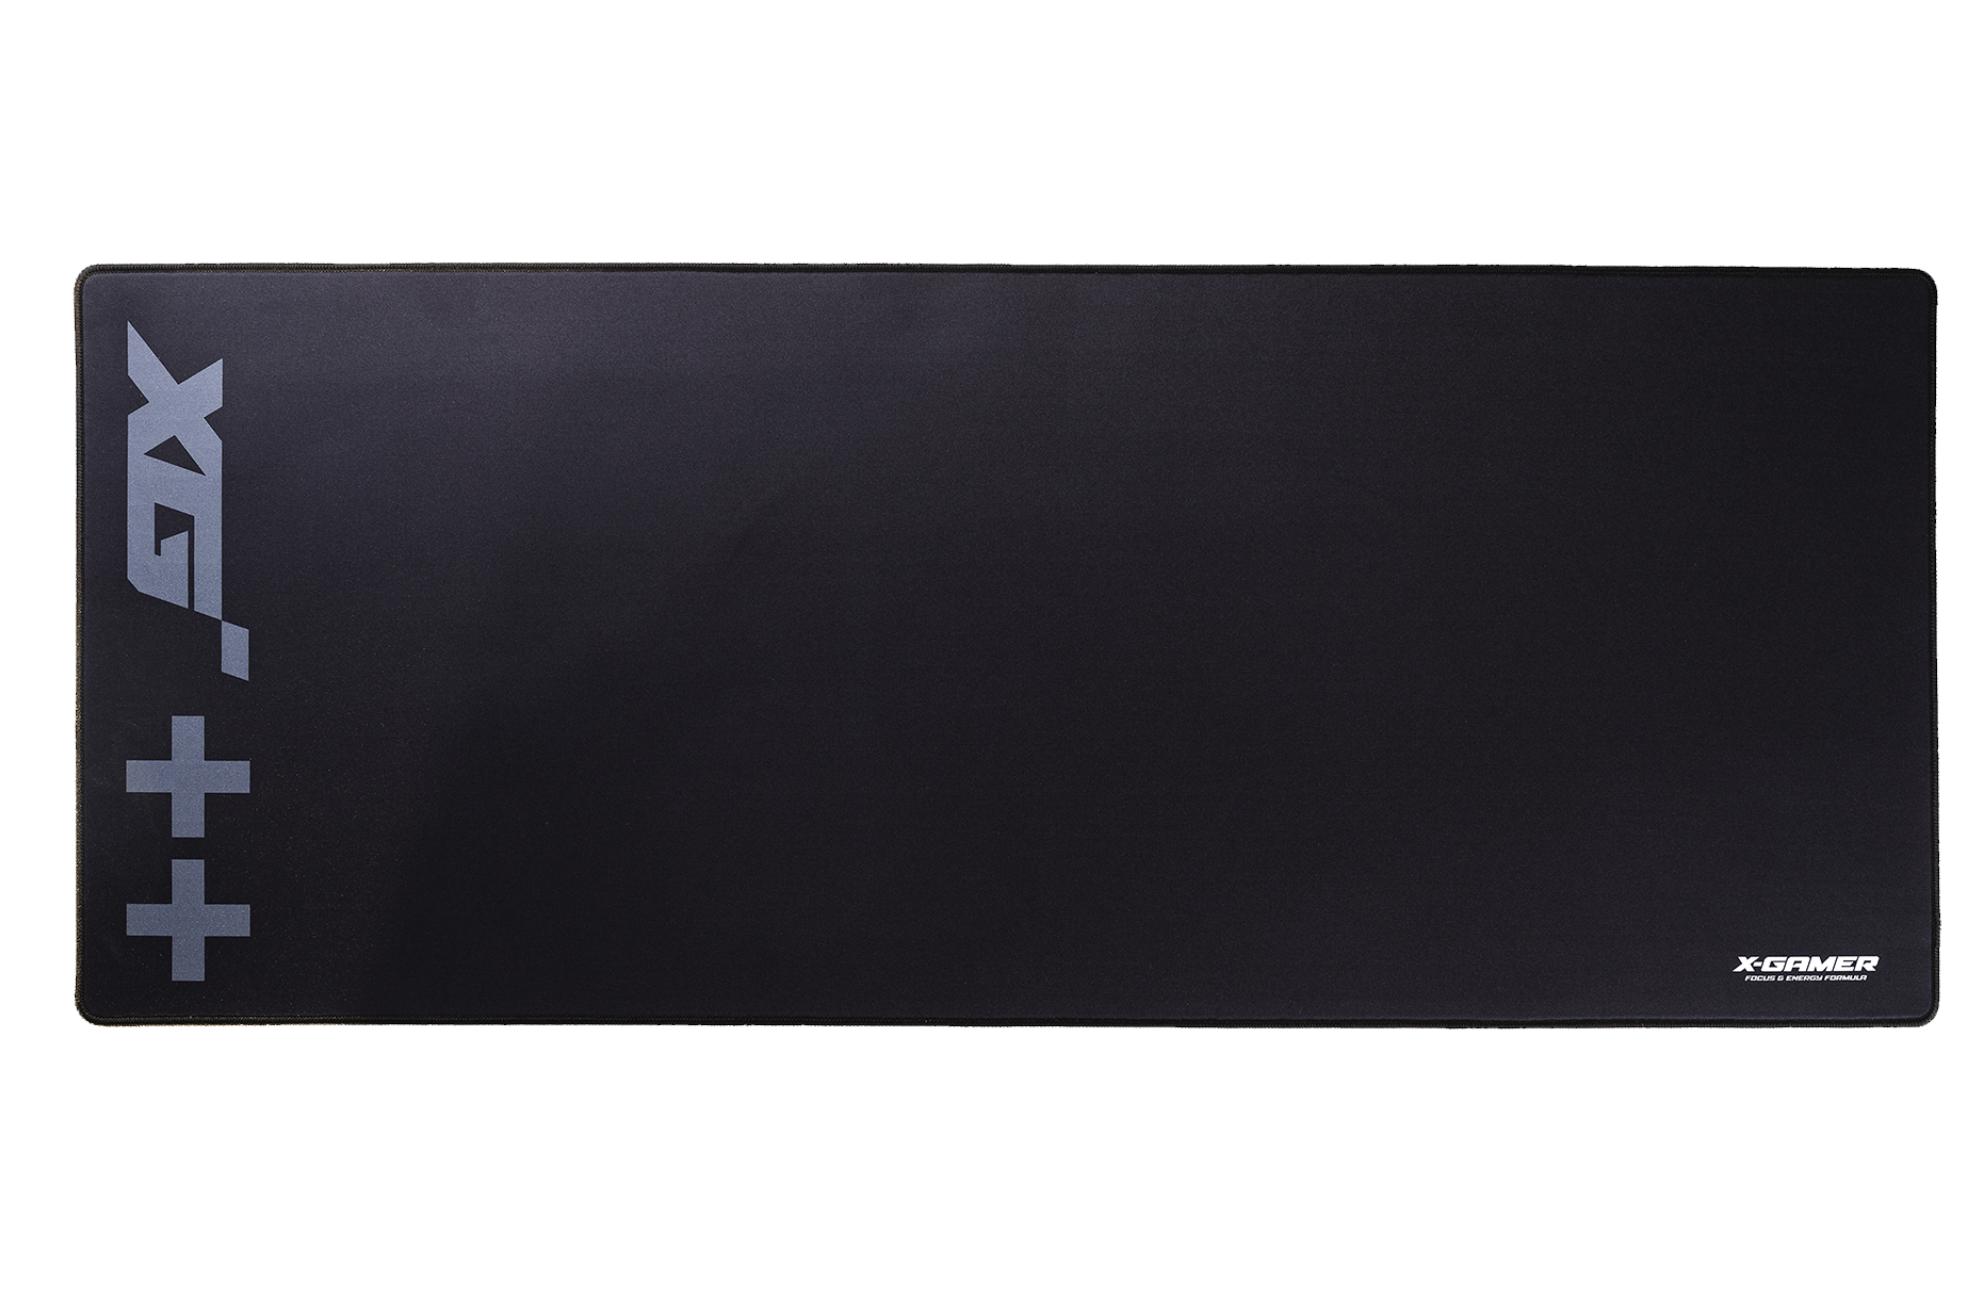 Official X-Gamer Pro mousepad (1100x450mm)